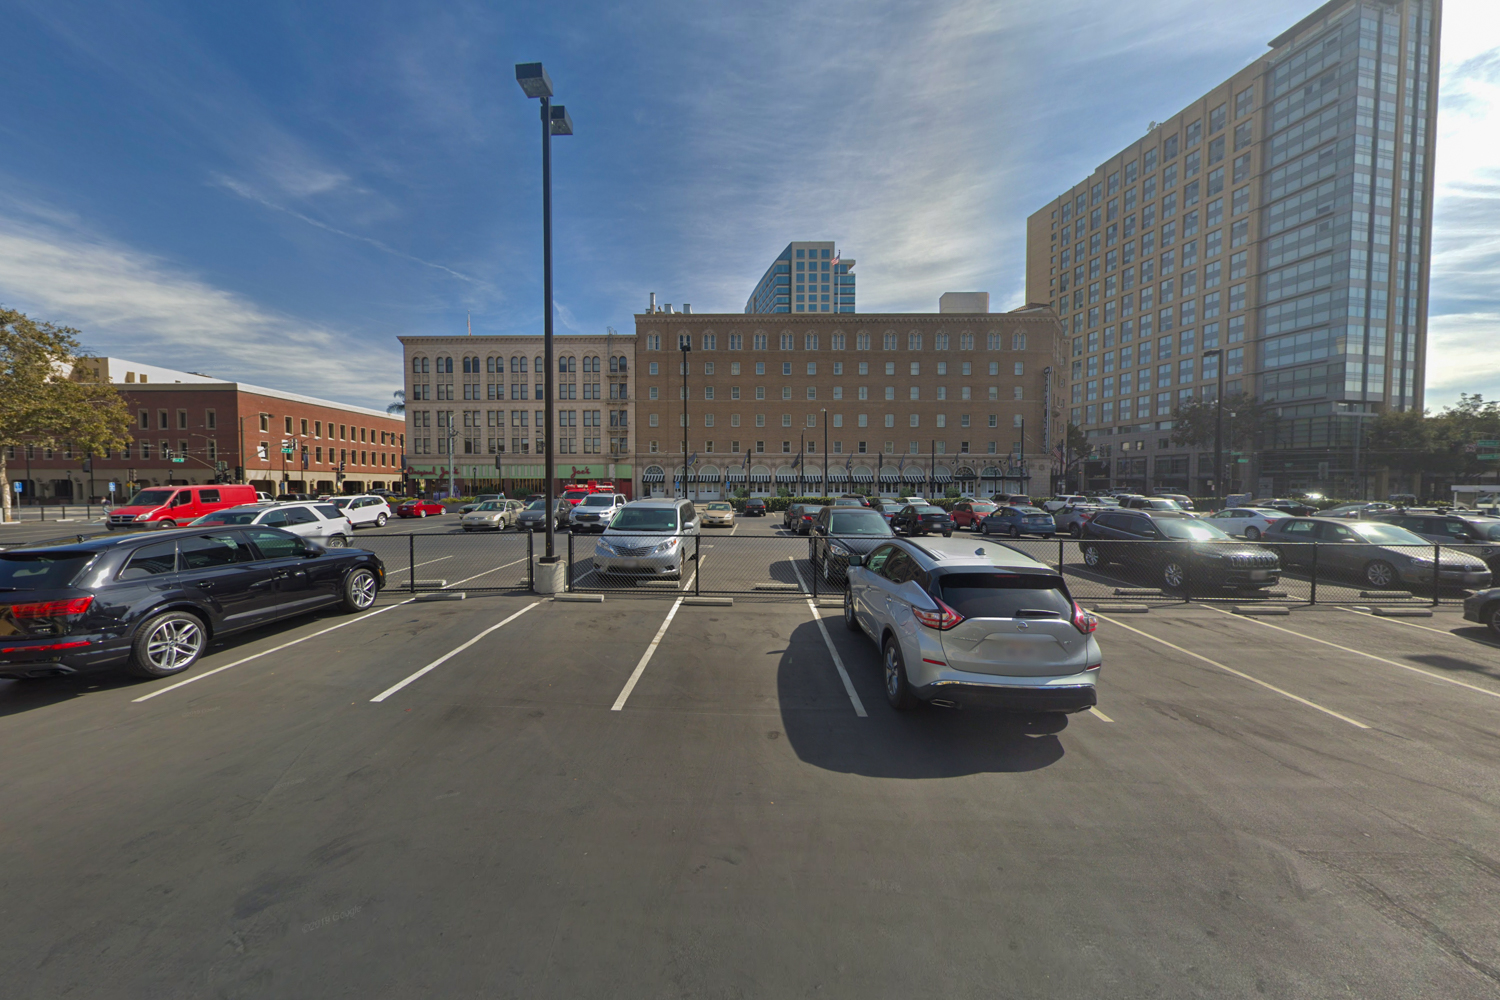 282 South Market Street, via Google Street View